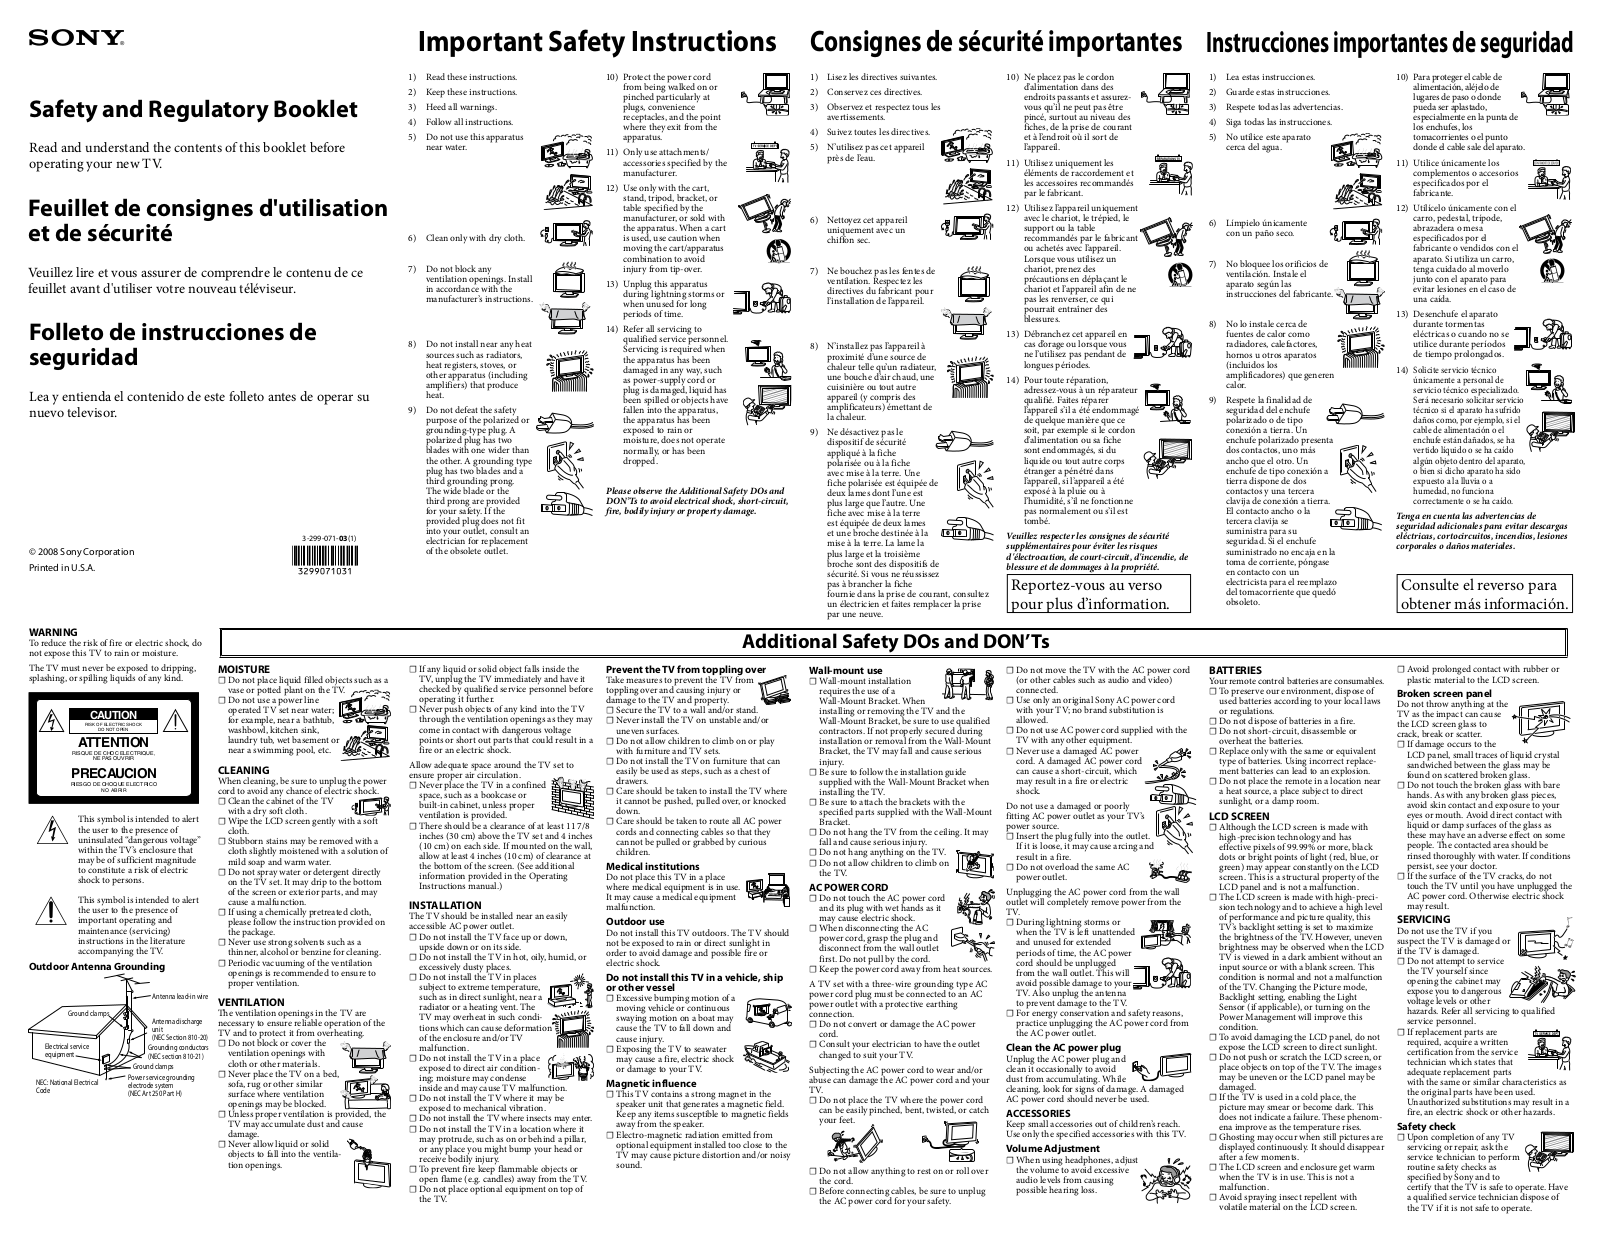 Sony XBR-52LX900, XBR-52HX909, NSX-32GT1, KDL-60NX800, KDL-55EX501 Safety and Regulatory Booklet